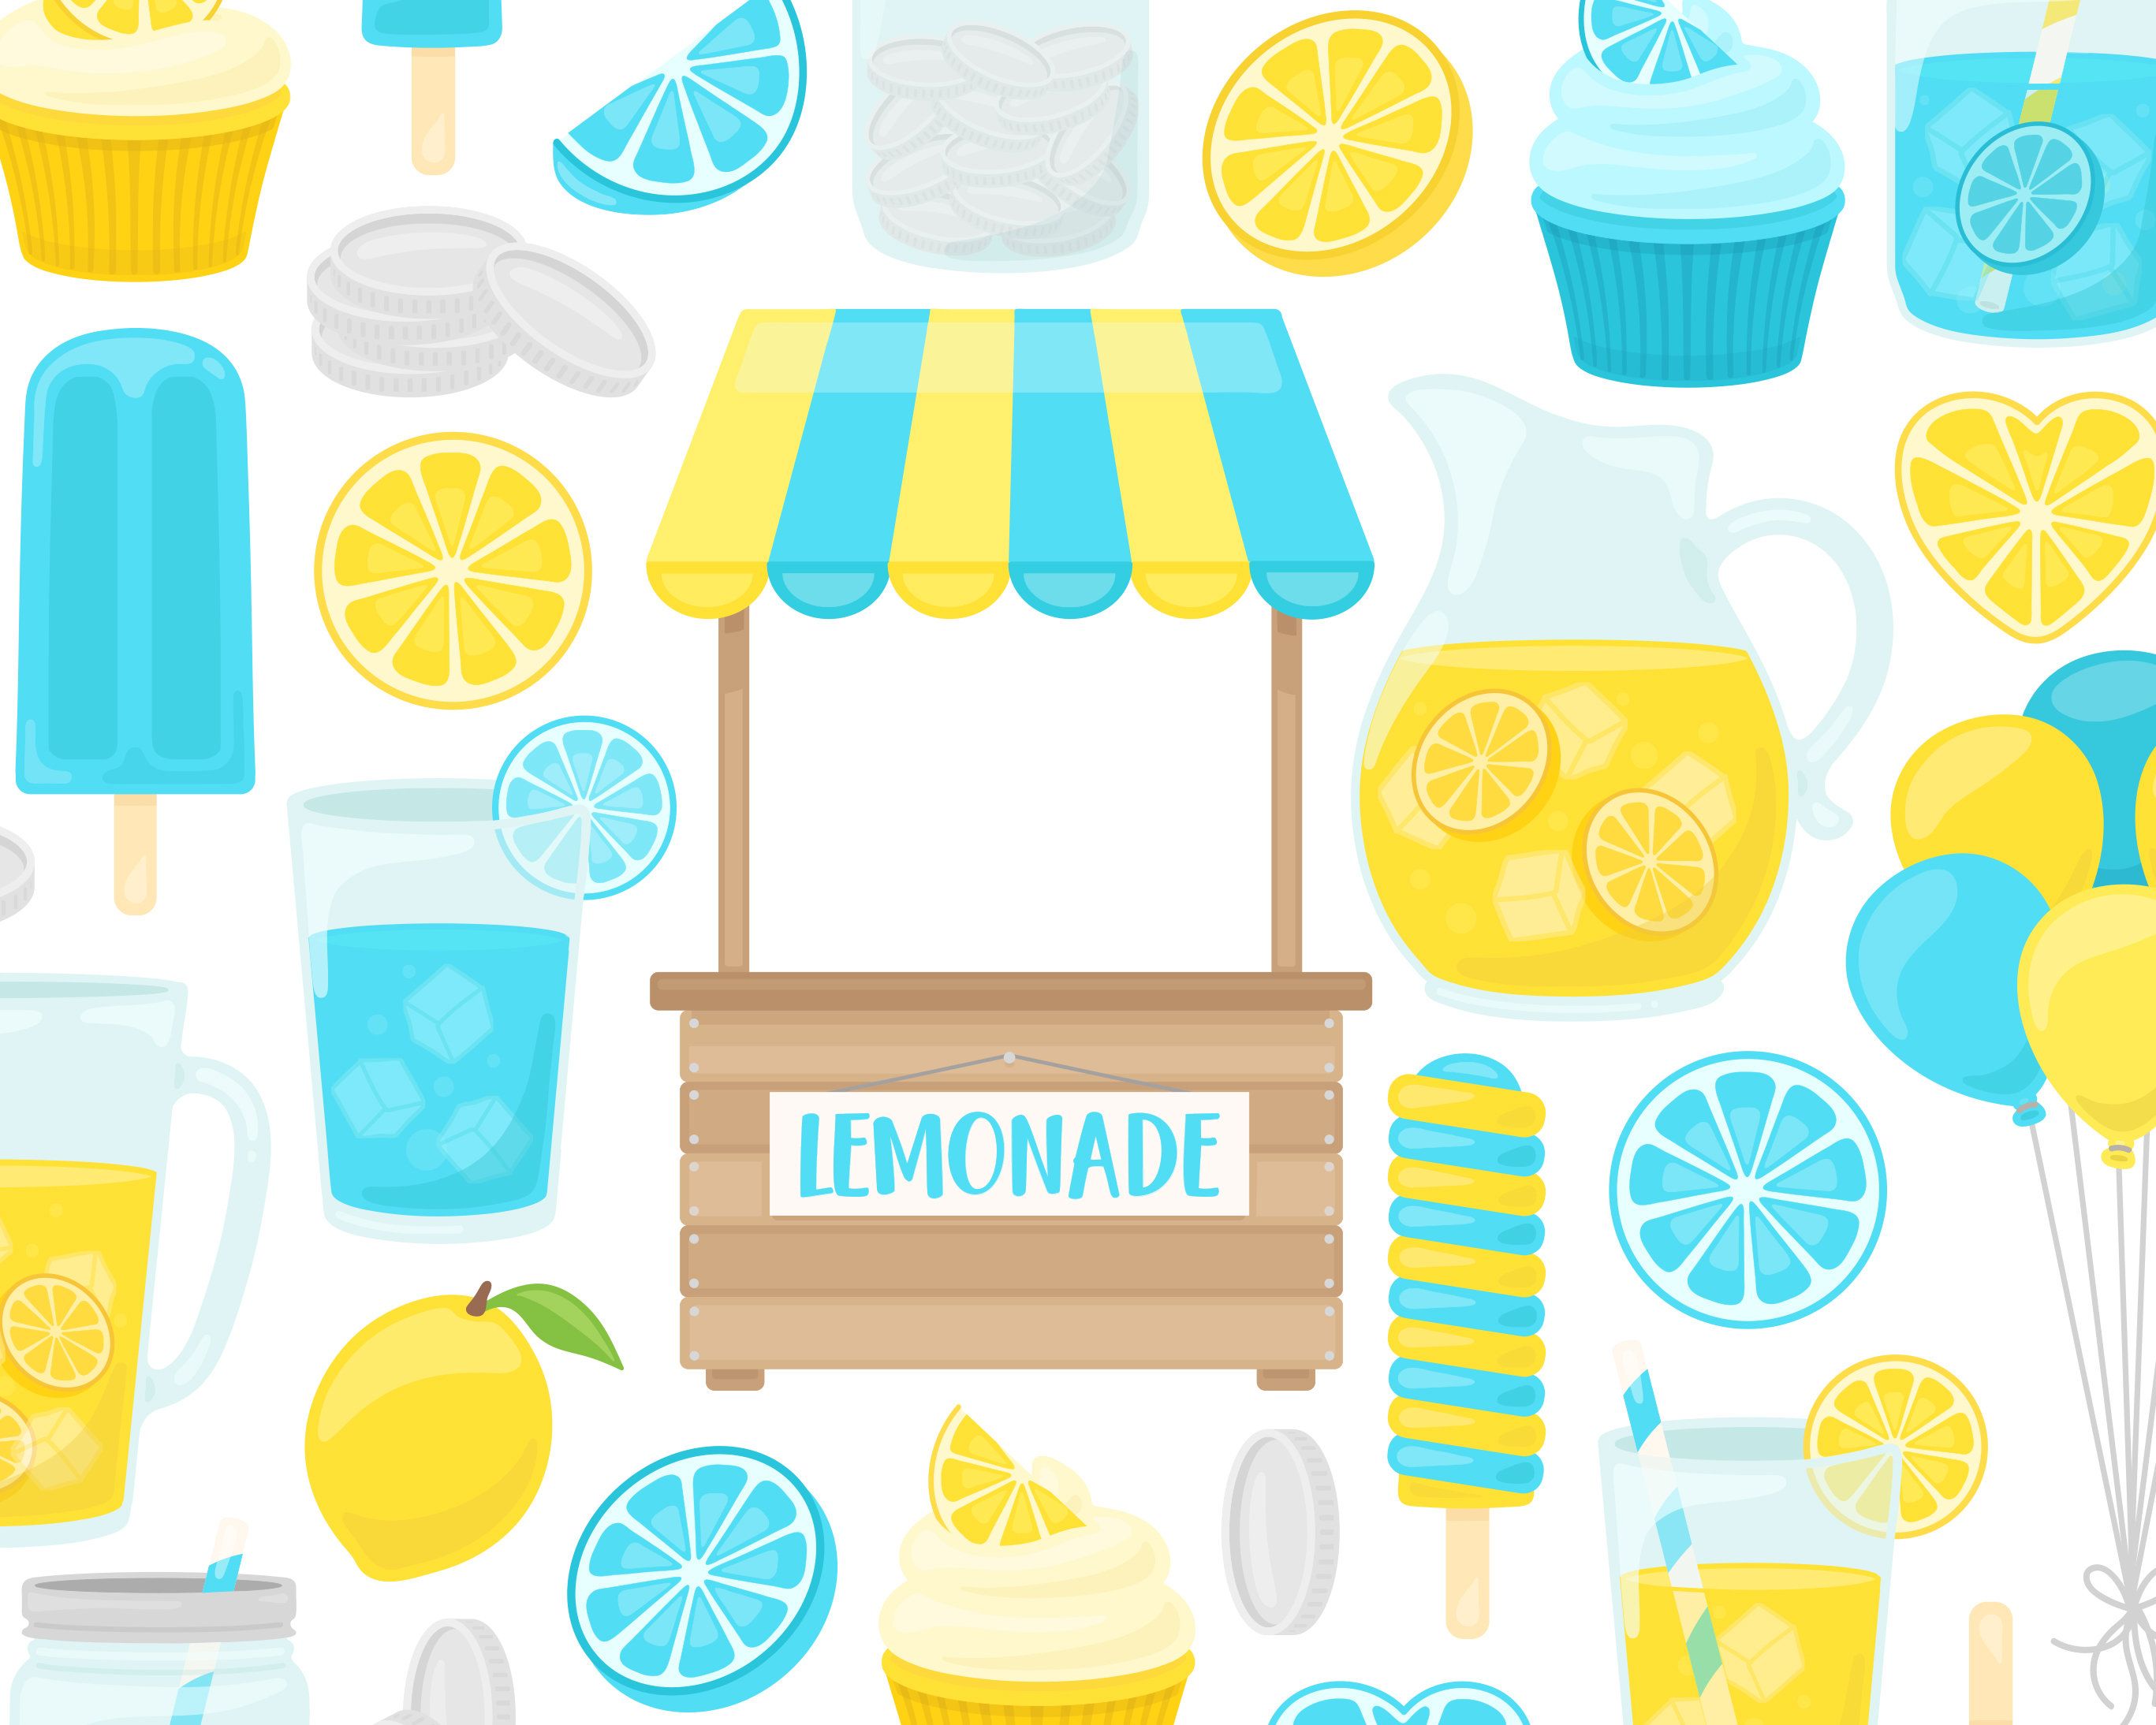 Blue lemonade stand.